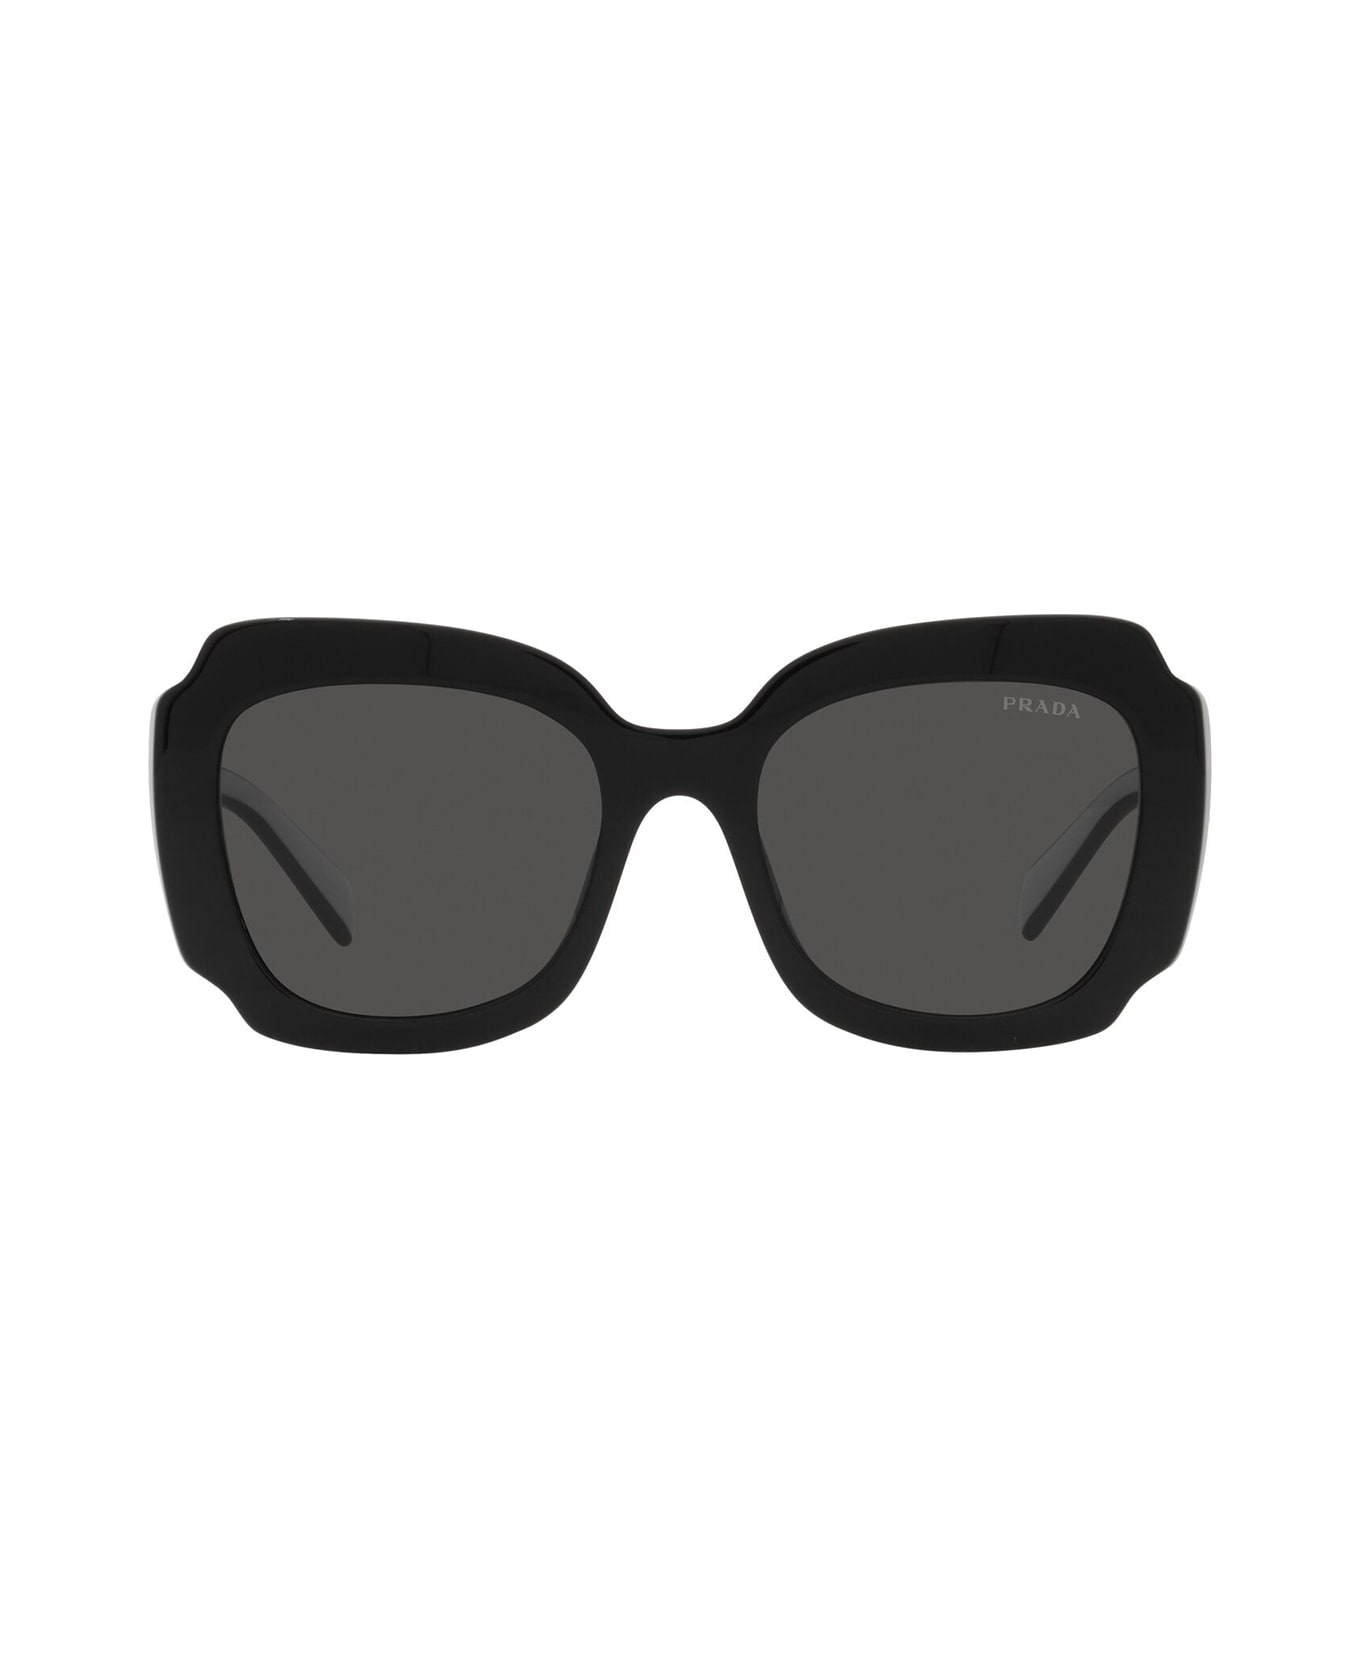 Prada Eyewear Pr 16ys Black Sunglasses - Black